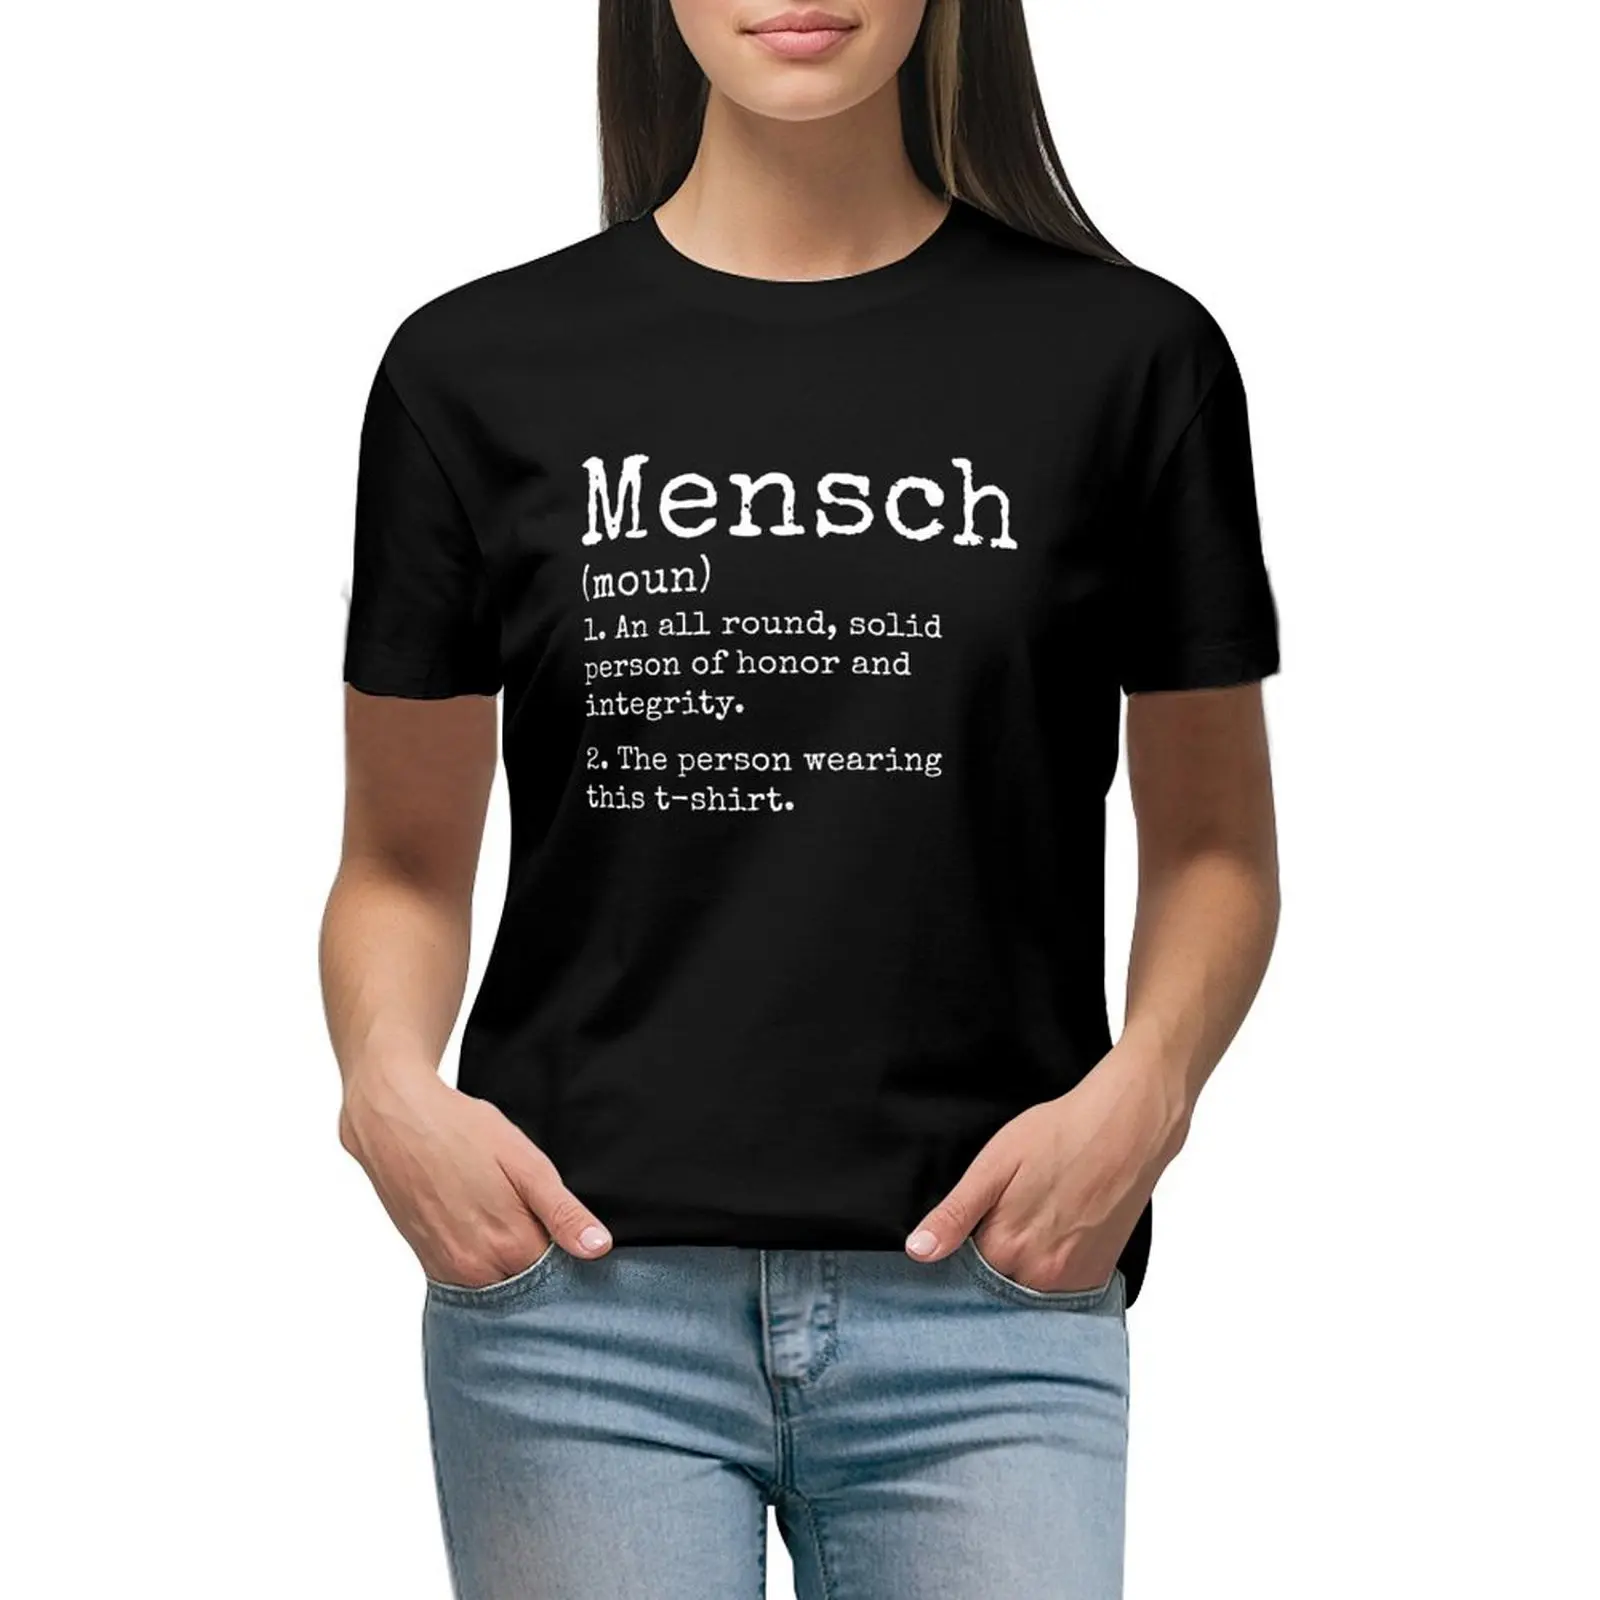 

Mensch Dictionary Definition T-shirt Blouse cute tops cat shirts for Women